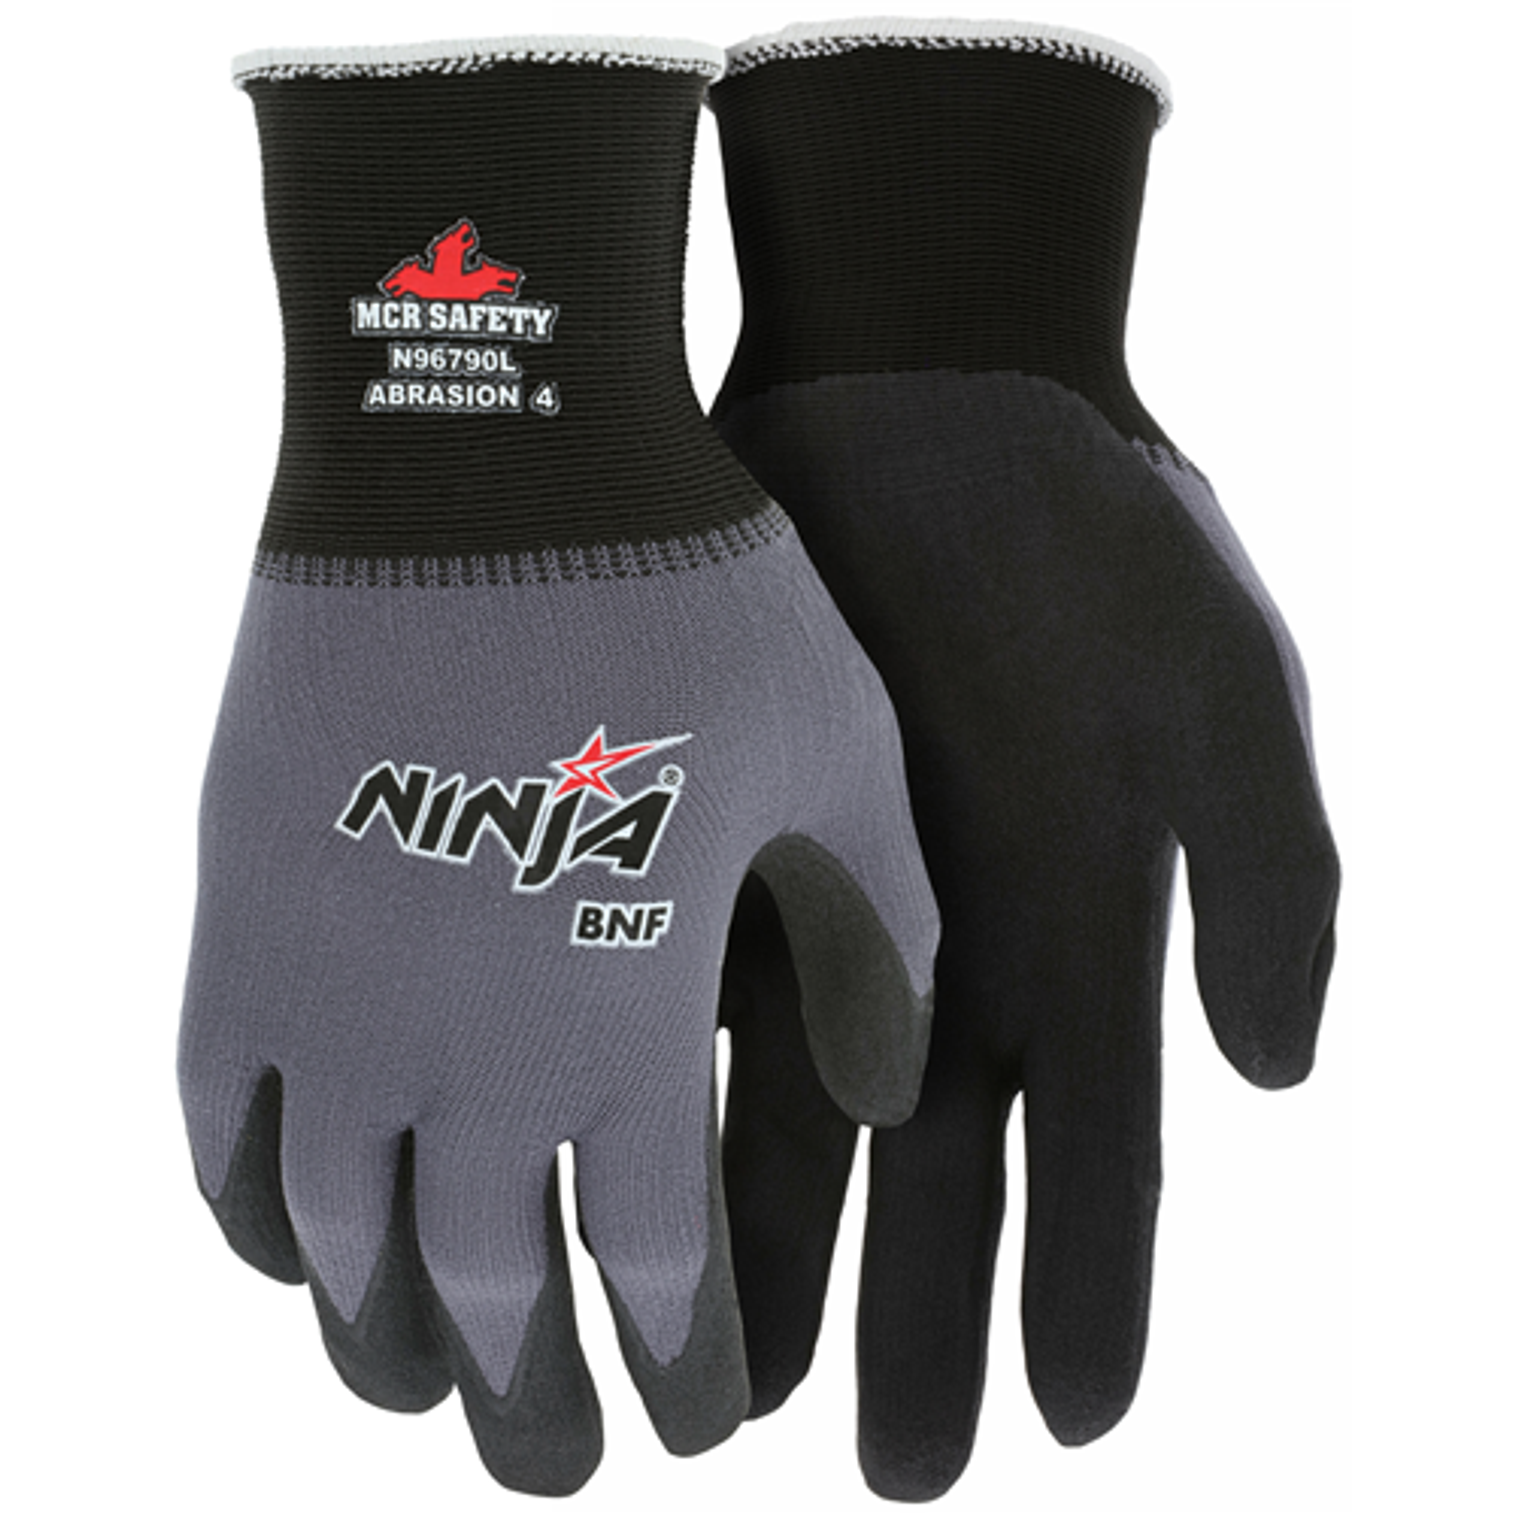 Ninja Bnf, 15 G-palm Coat - KRMCR-N96790M